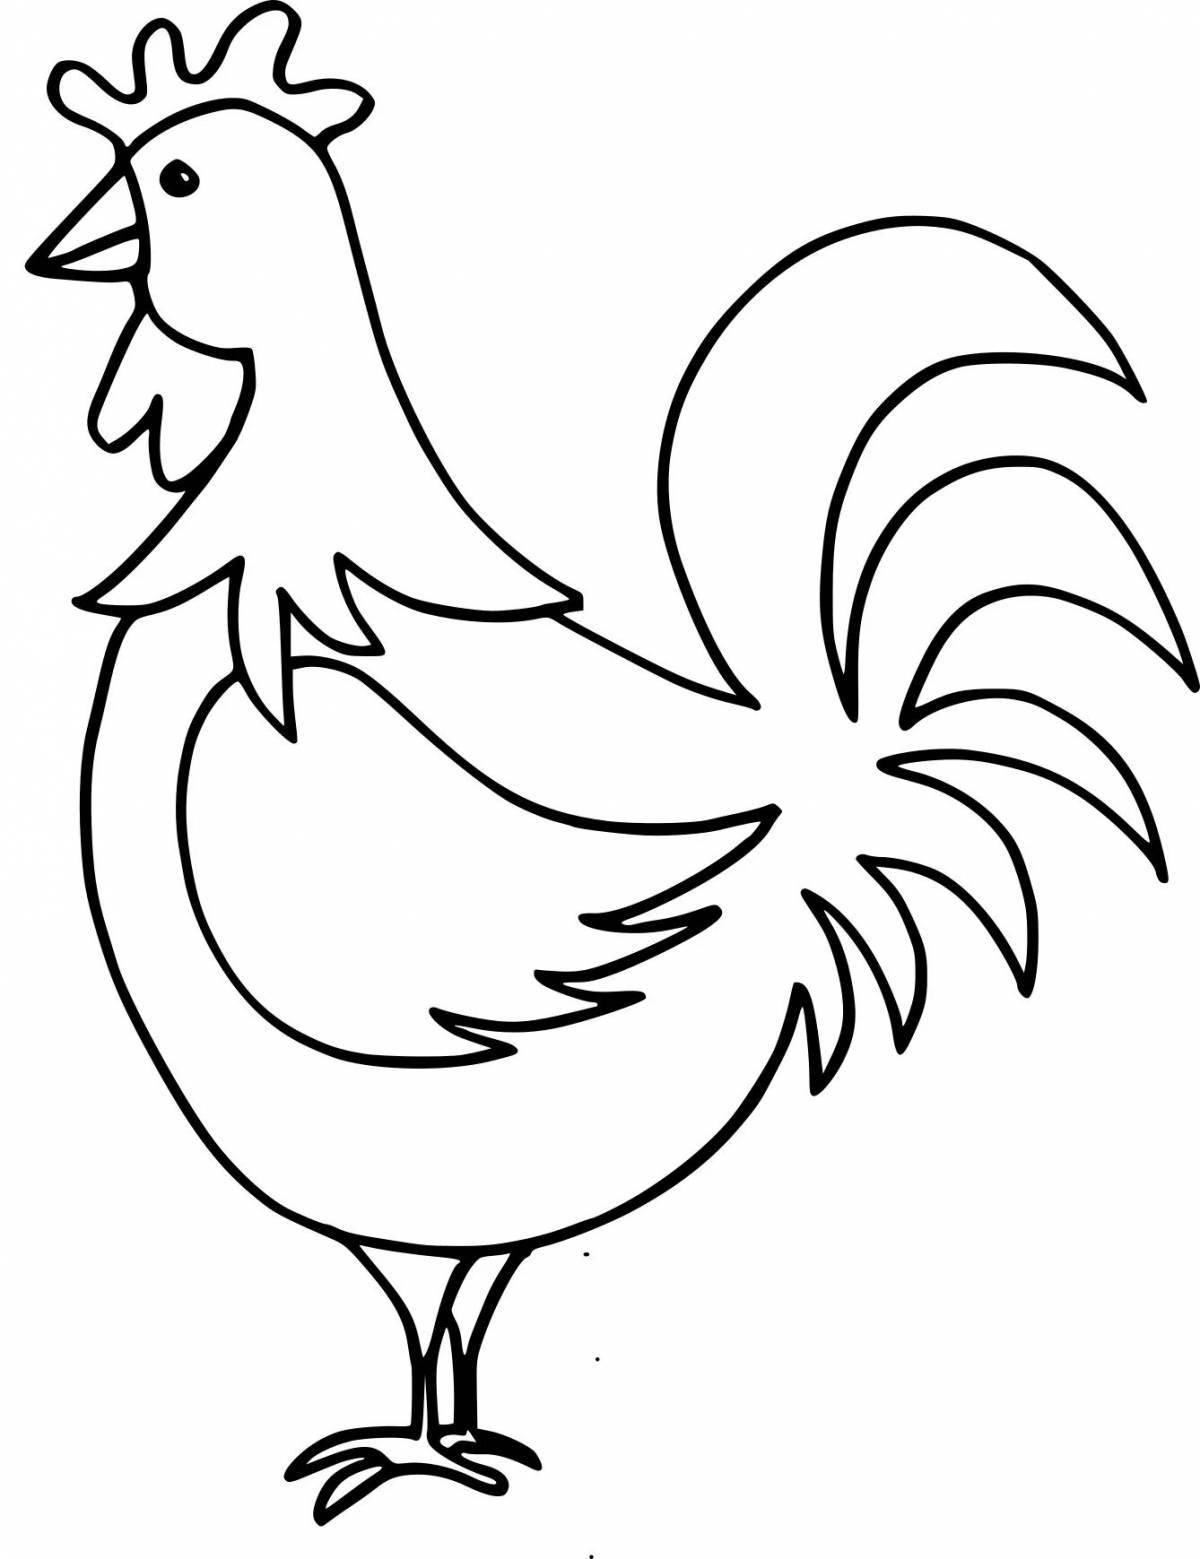 Joyful cockerel drawing